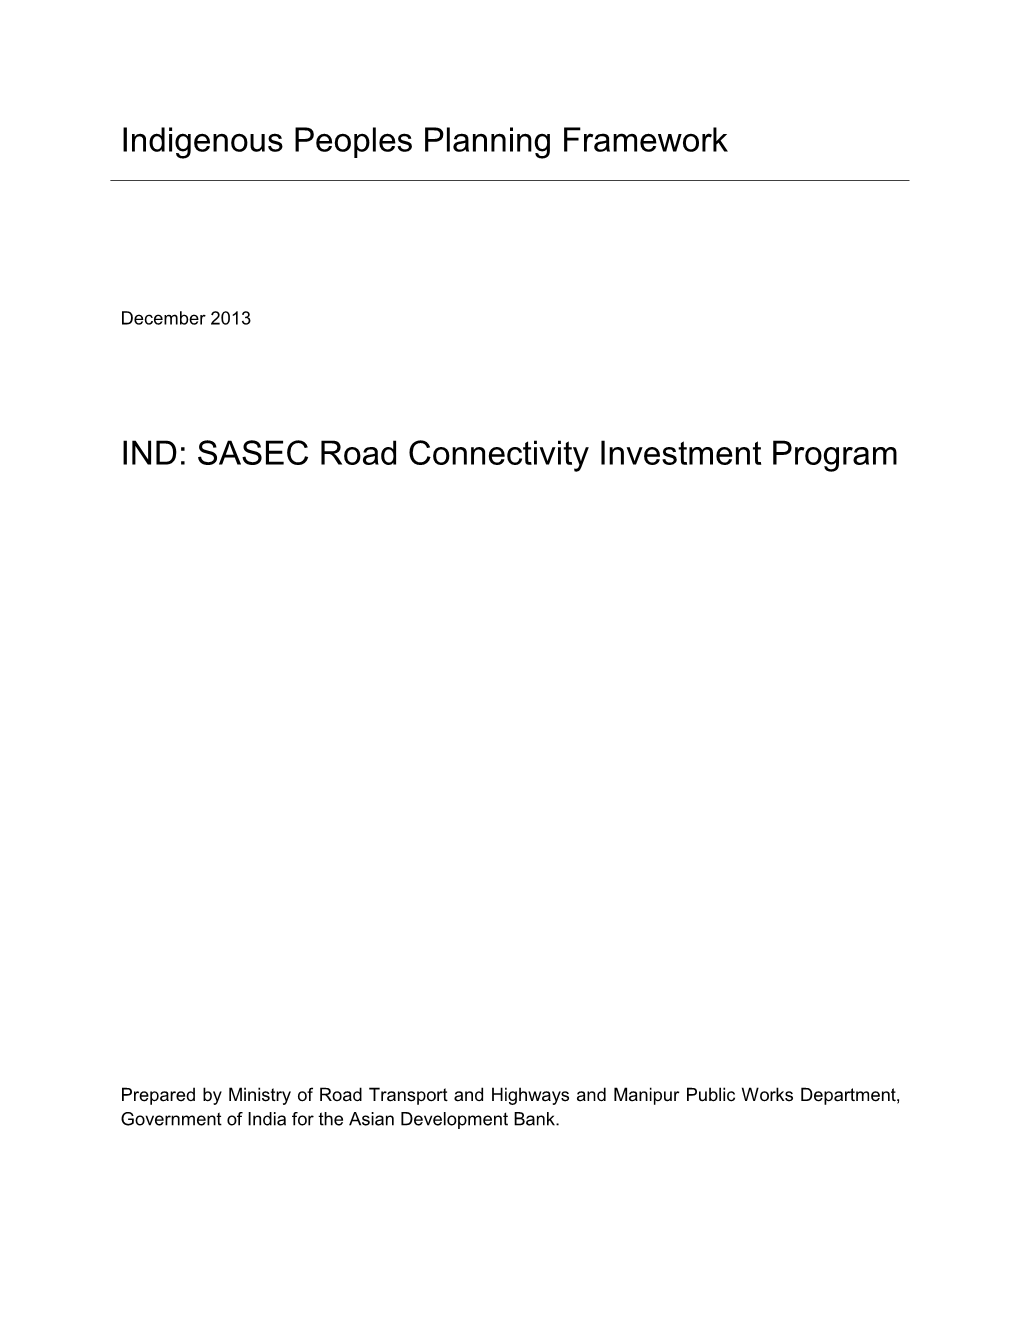 SASEC Road Connectivity Investment Program